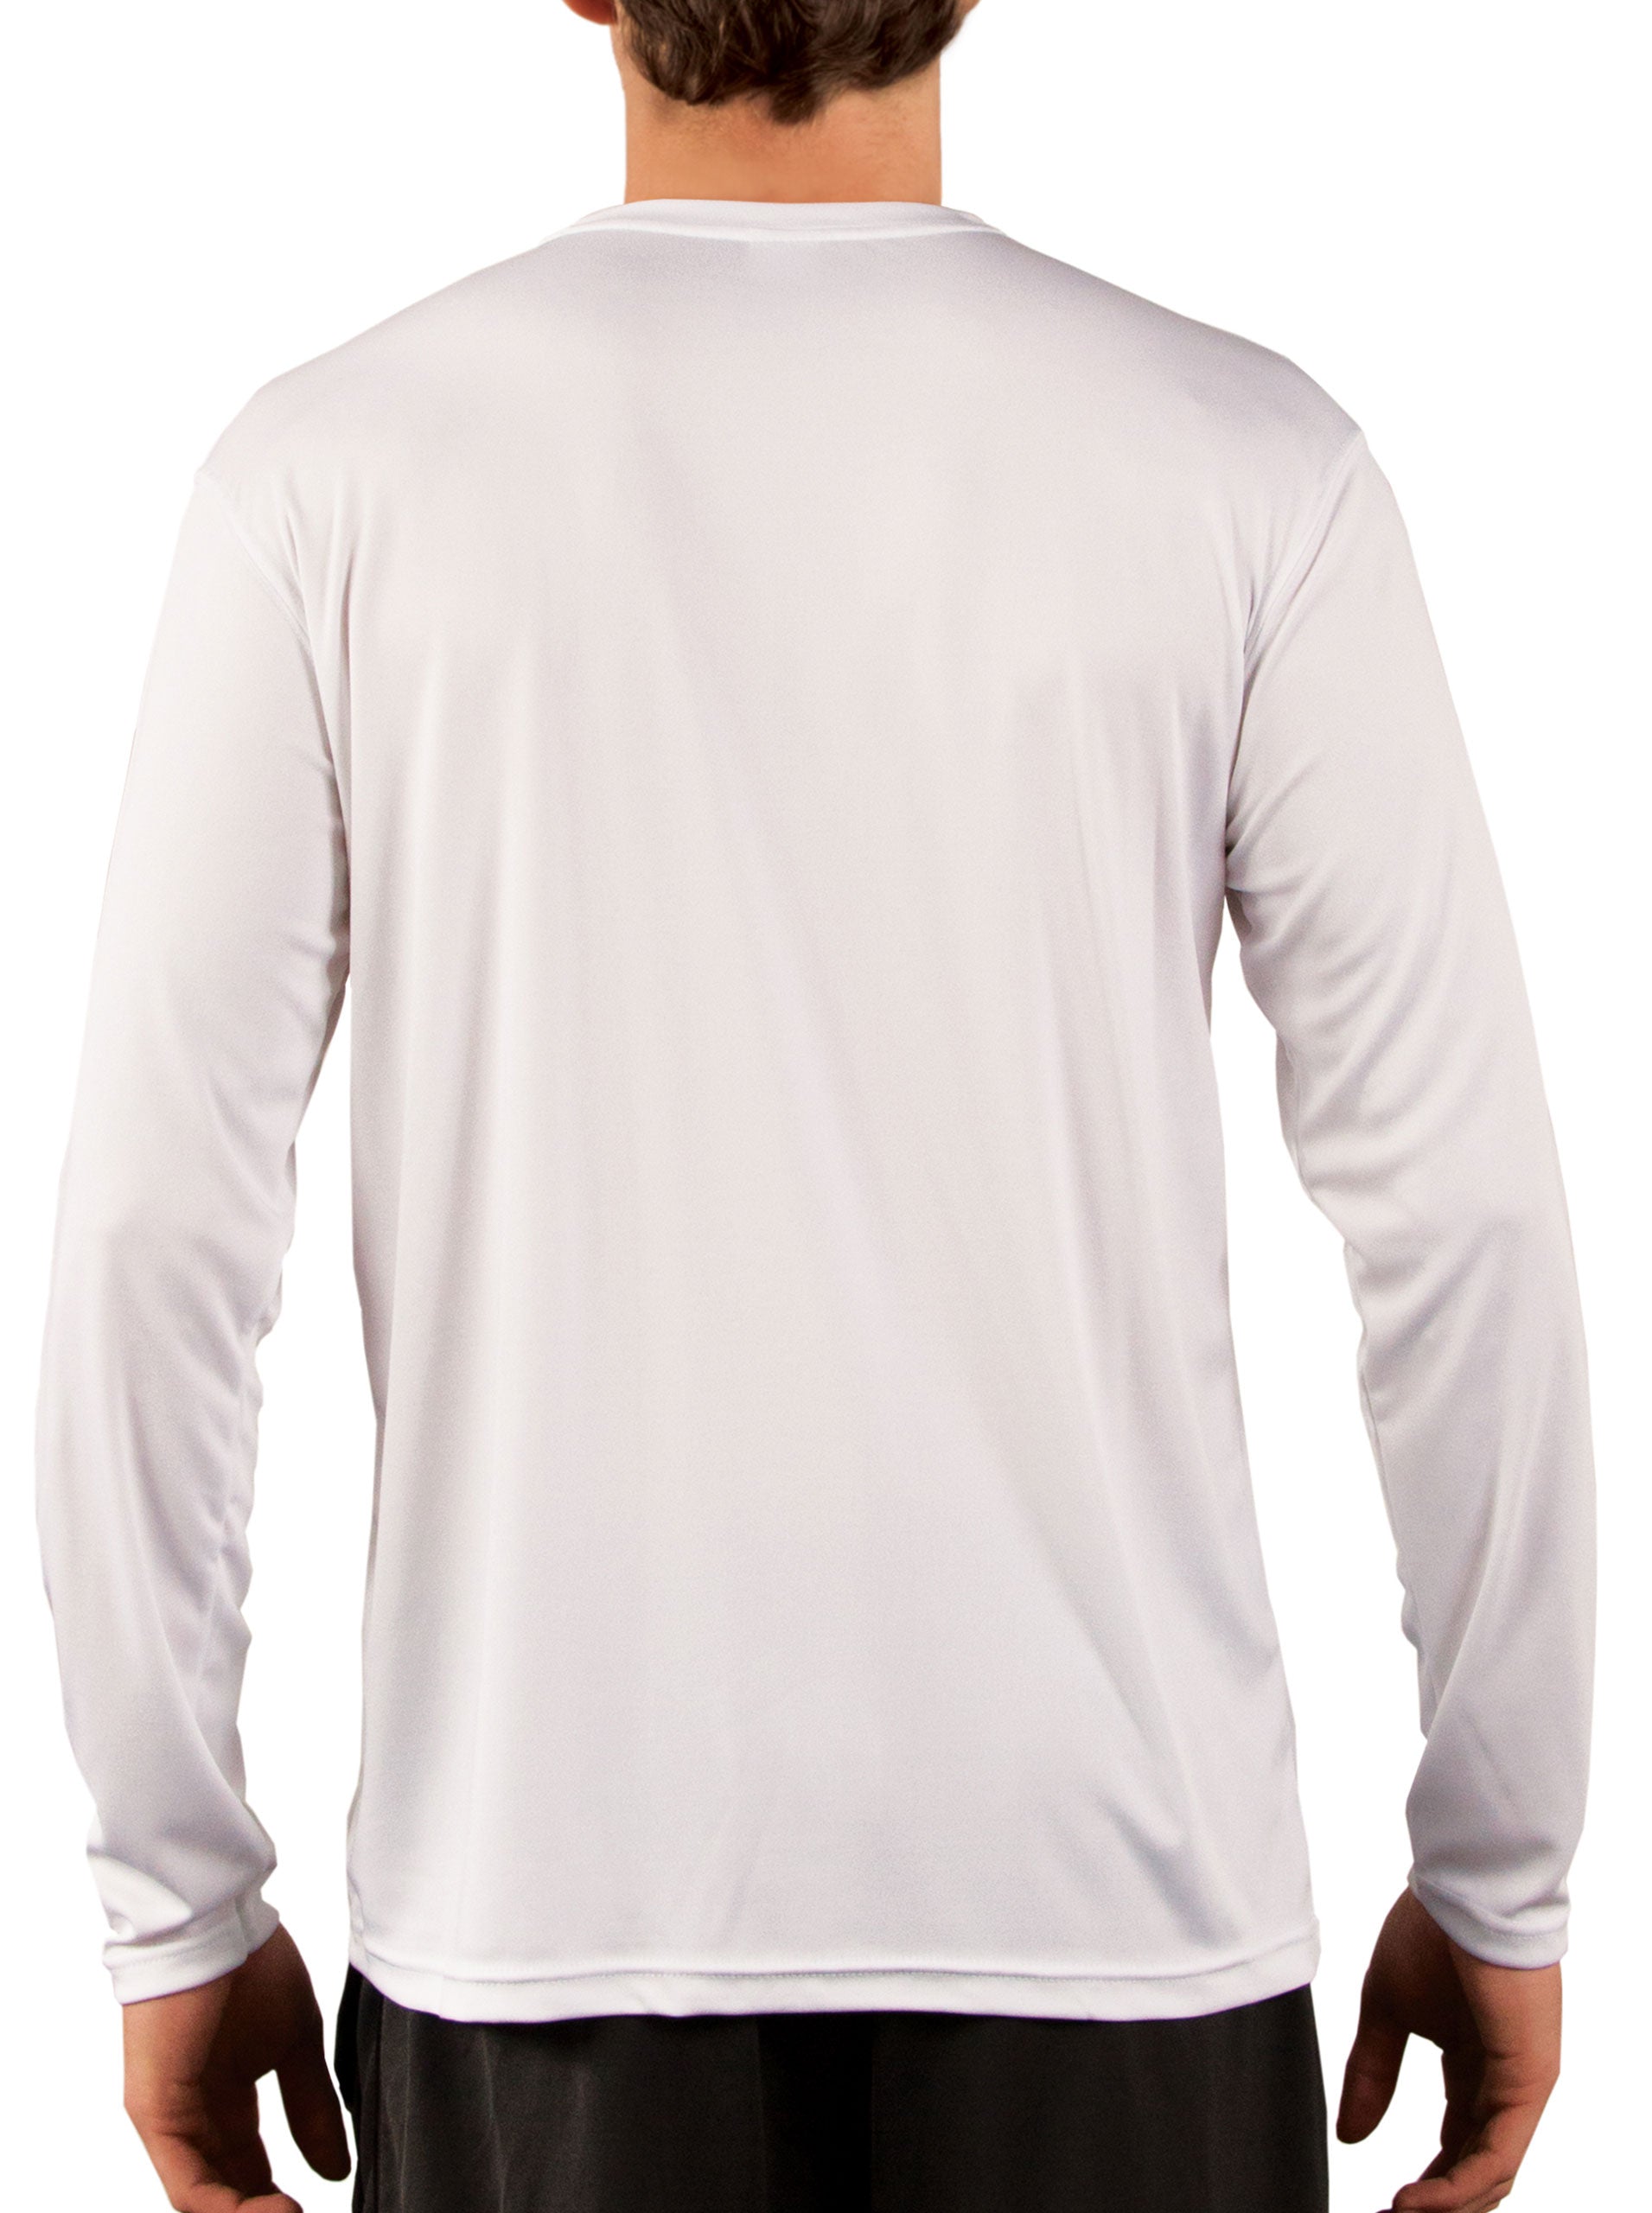 Reel Life UV Long Sleeve Performance T-Shirt - Medium - Dress